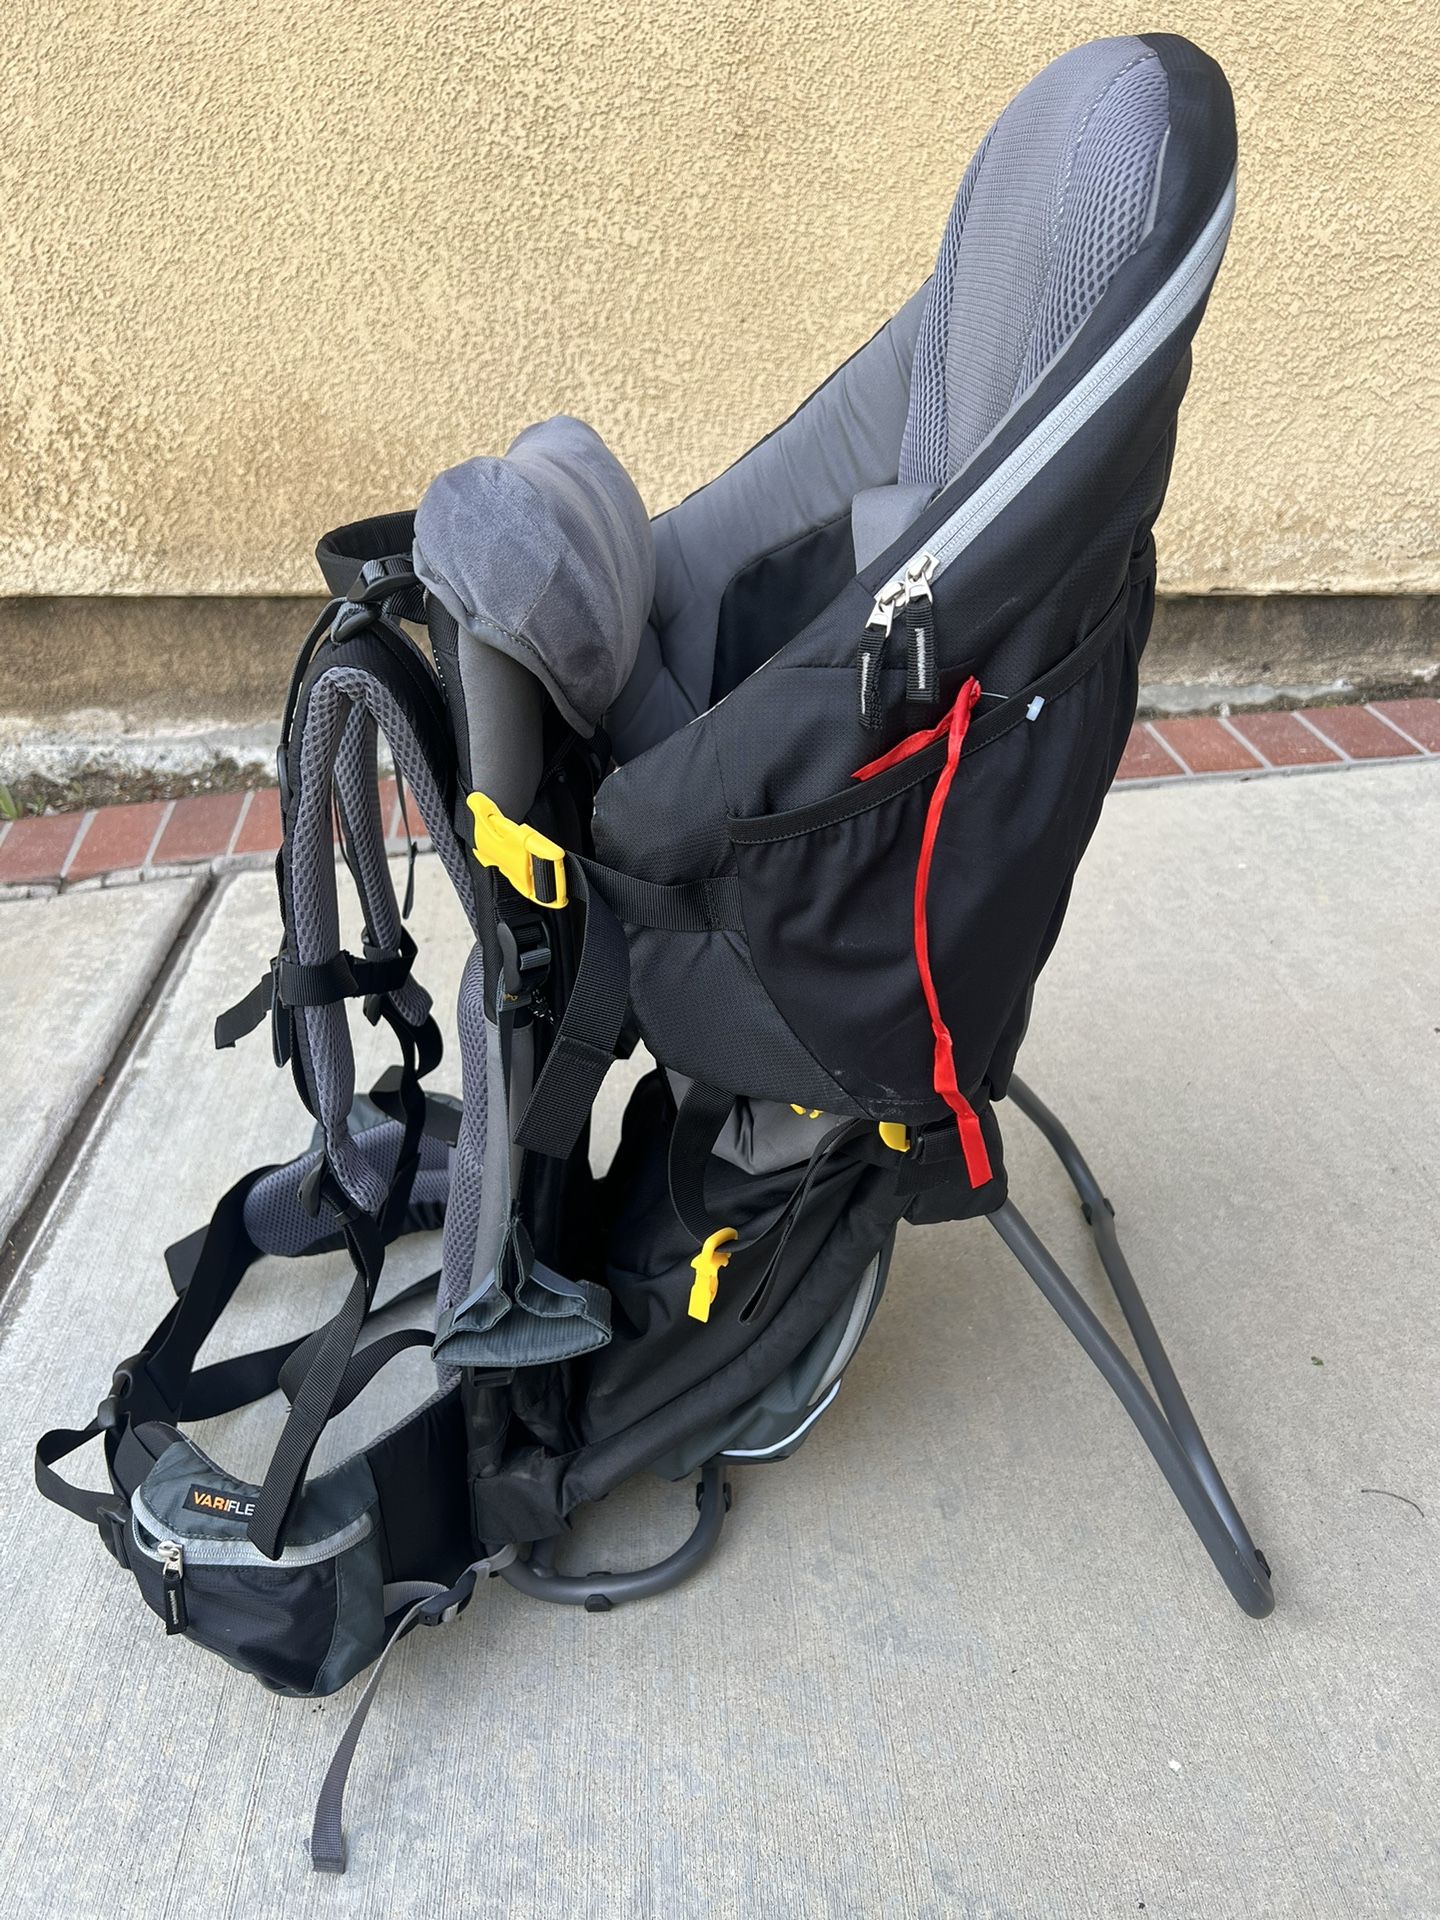 Deuter Kid Comfort 3 Child Carrier ($150)